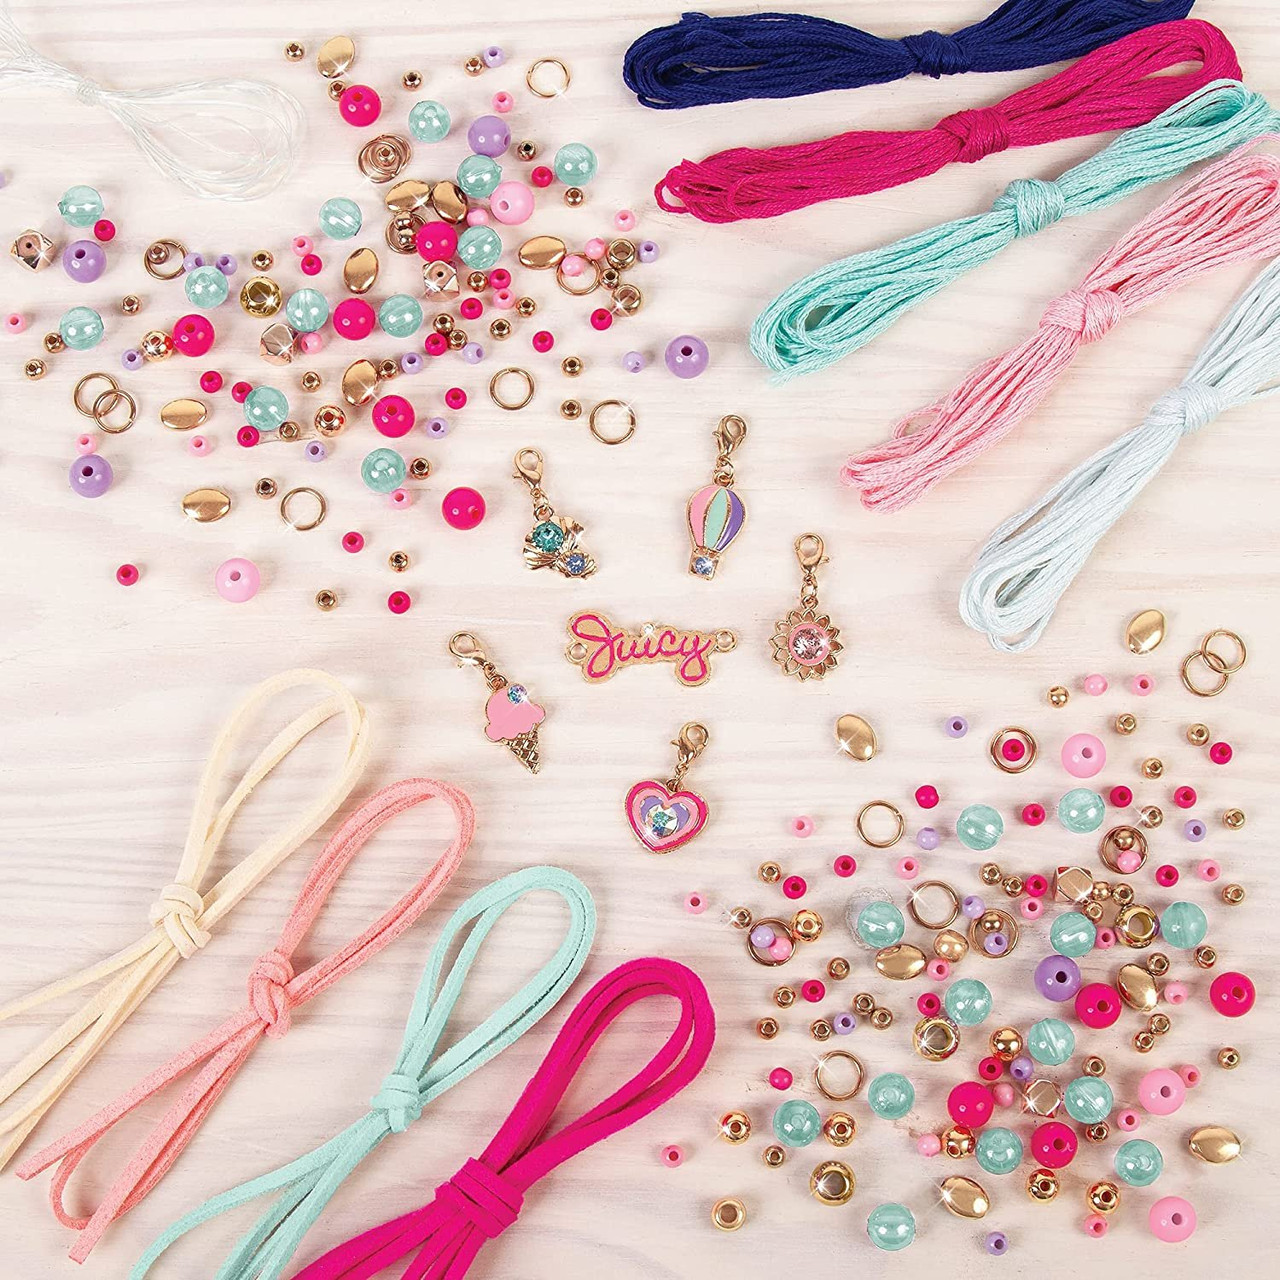 Make It Real - Juicy Couture 2 in 1 - Crystal Starlight & Crystal Sunshine  Bracelet Kits Bundle - DIY Charm Bracelet Making Kit for Girls with  Swarovski Crystal Charms & Beads - Makes 15 Bracelets - Toys 4 U